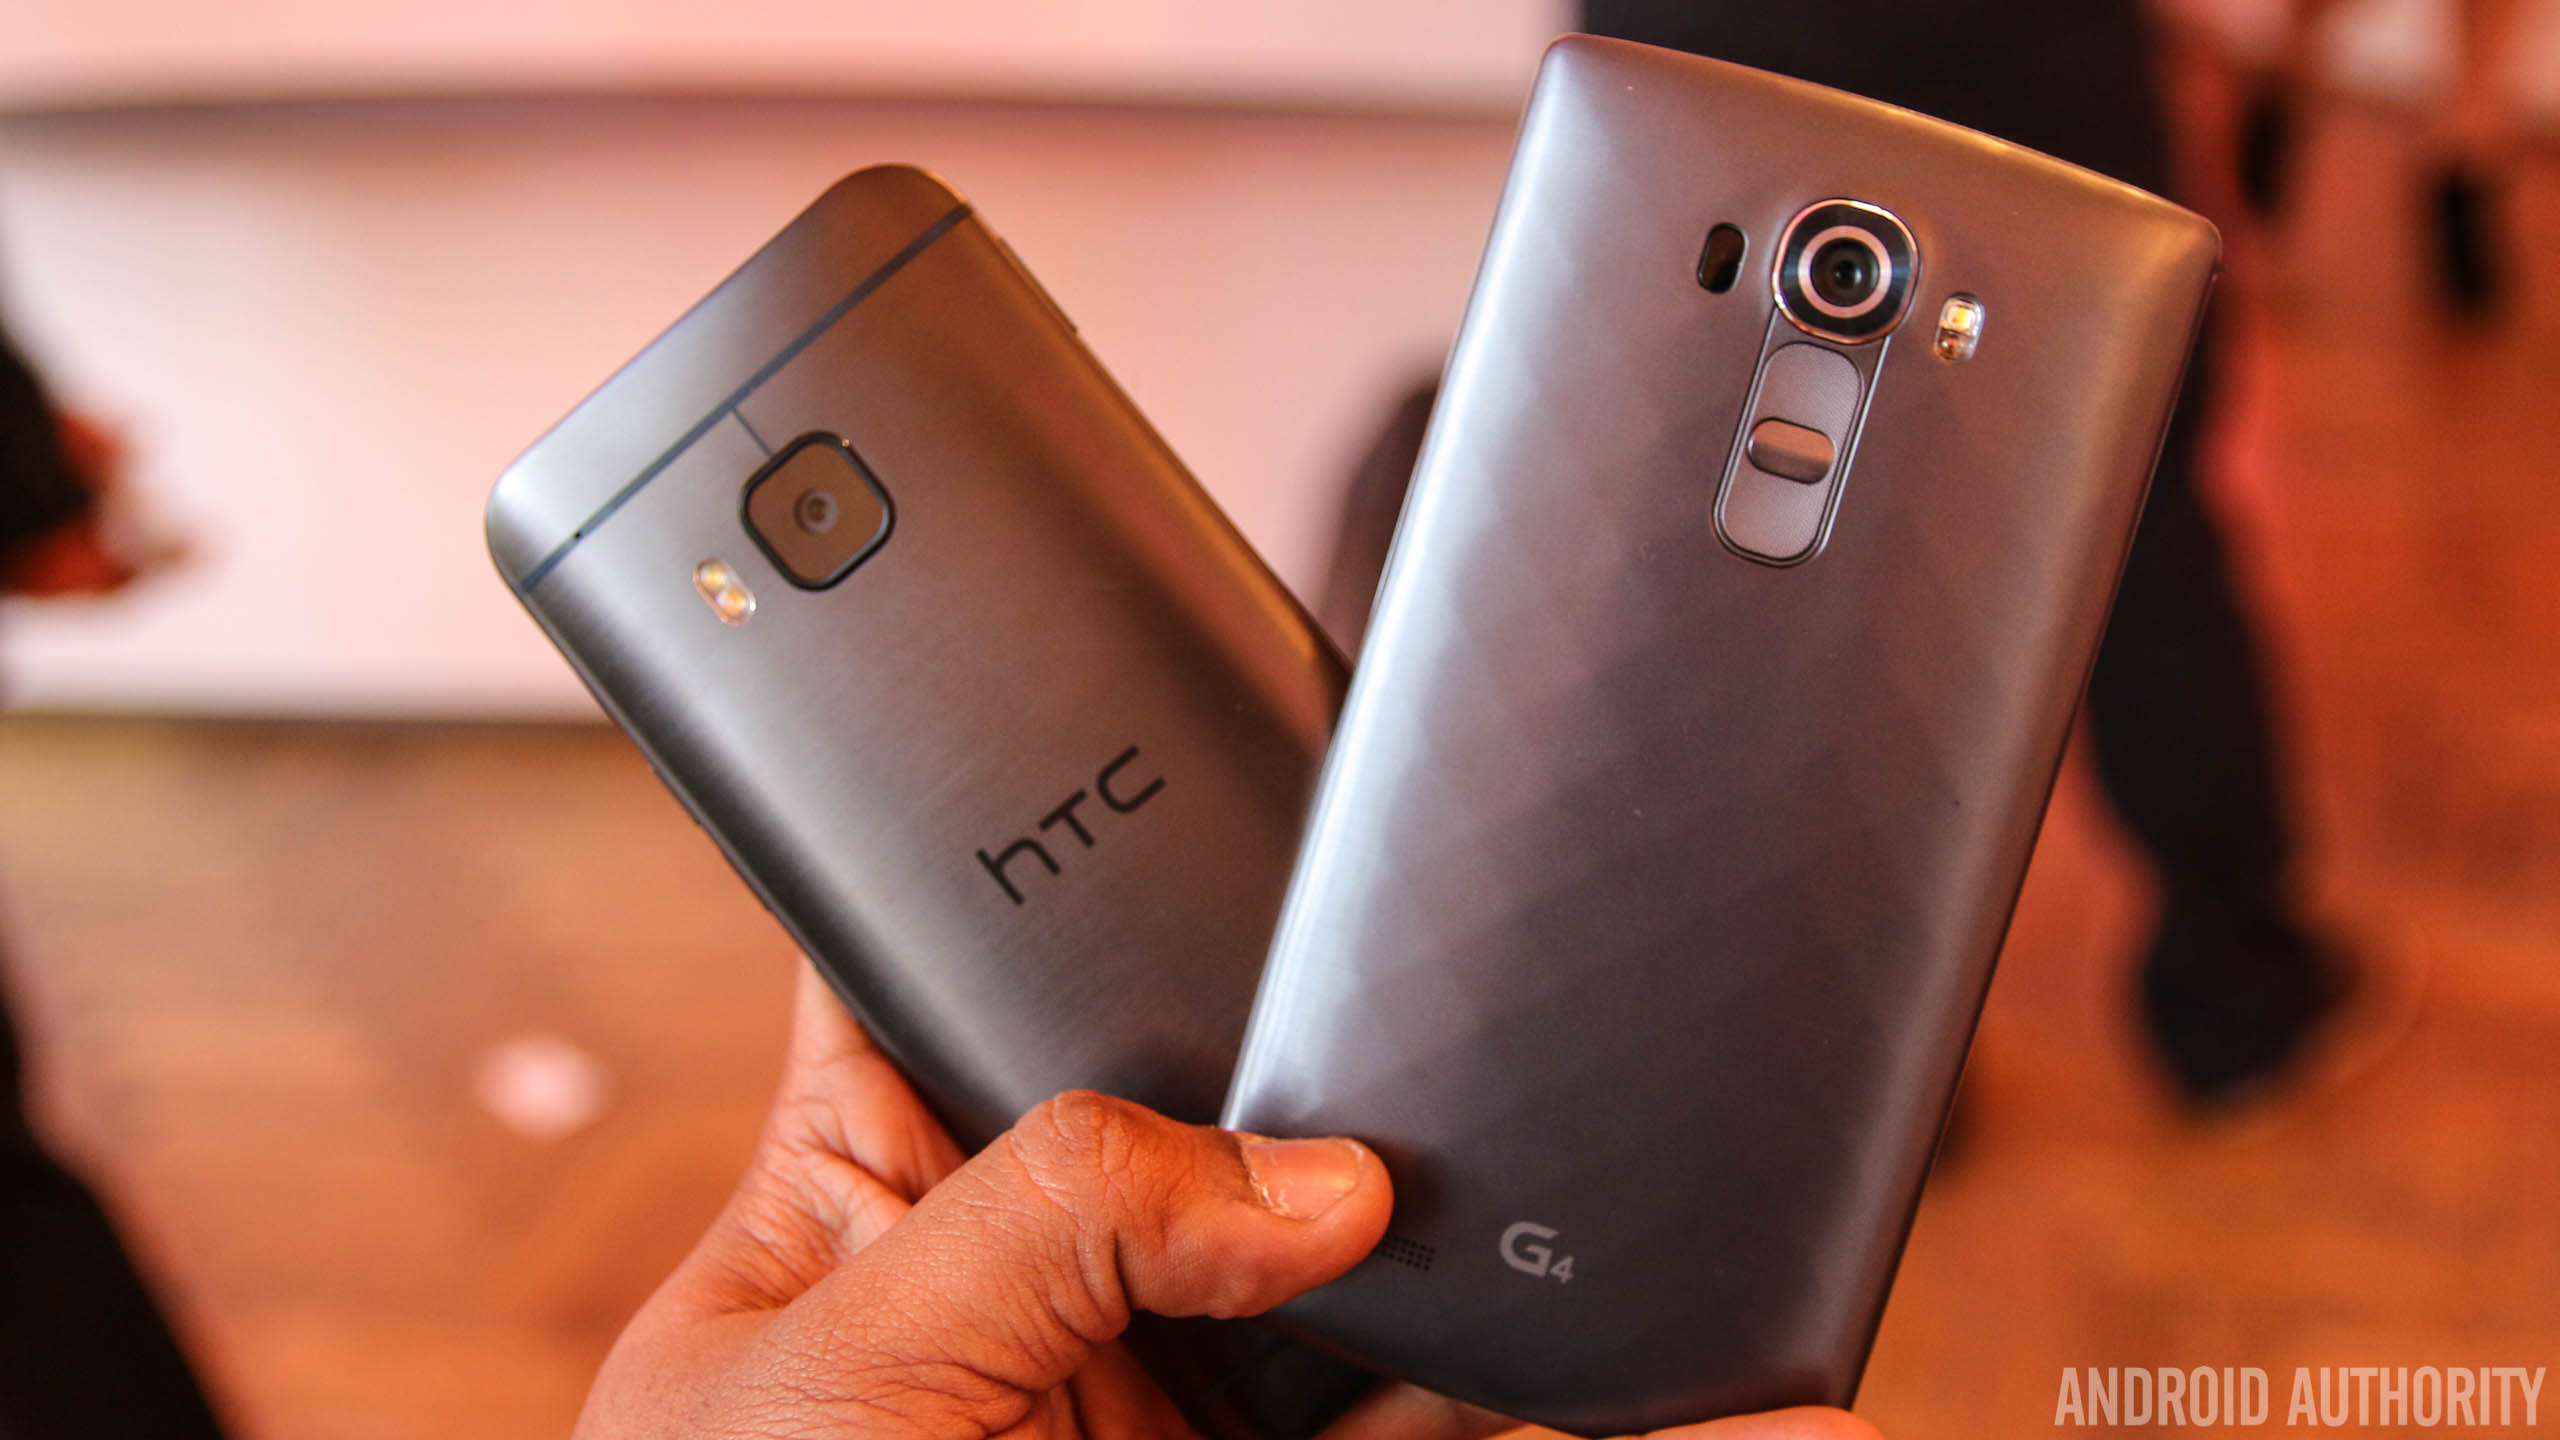 LG-G4-vs-HTC-One-M9-12